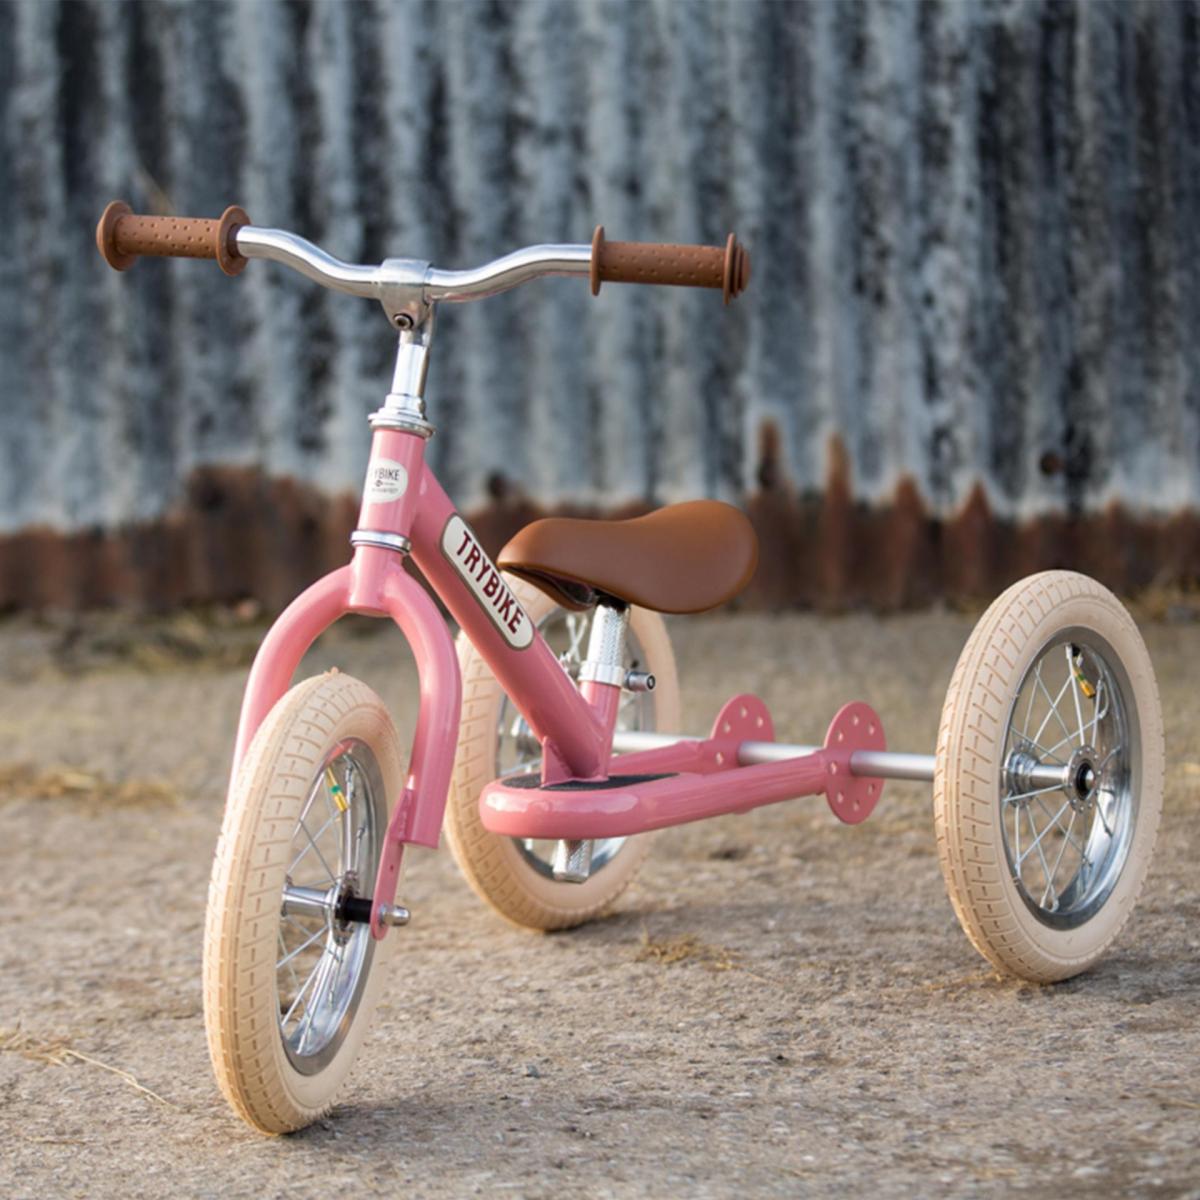 TryBike 2 In 1 Balance Trike/ Bike - Vintage Pink